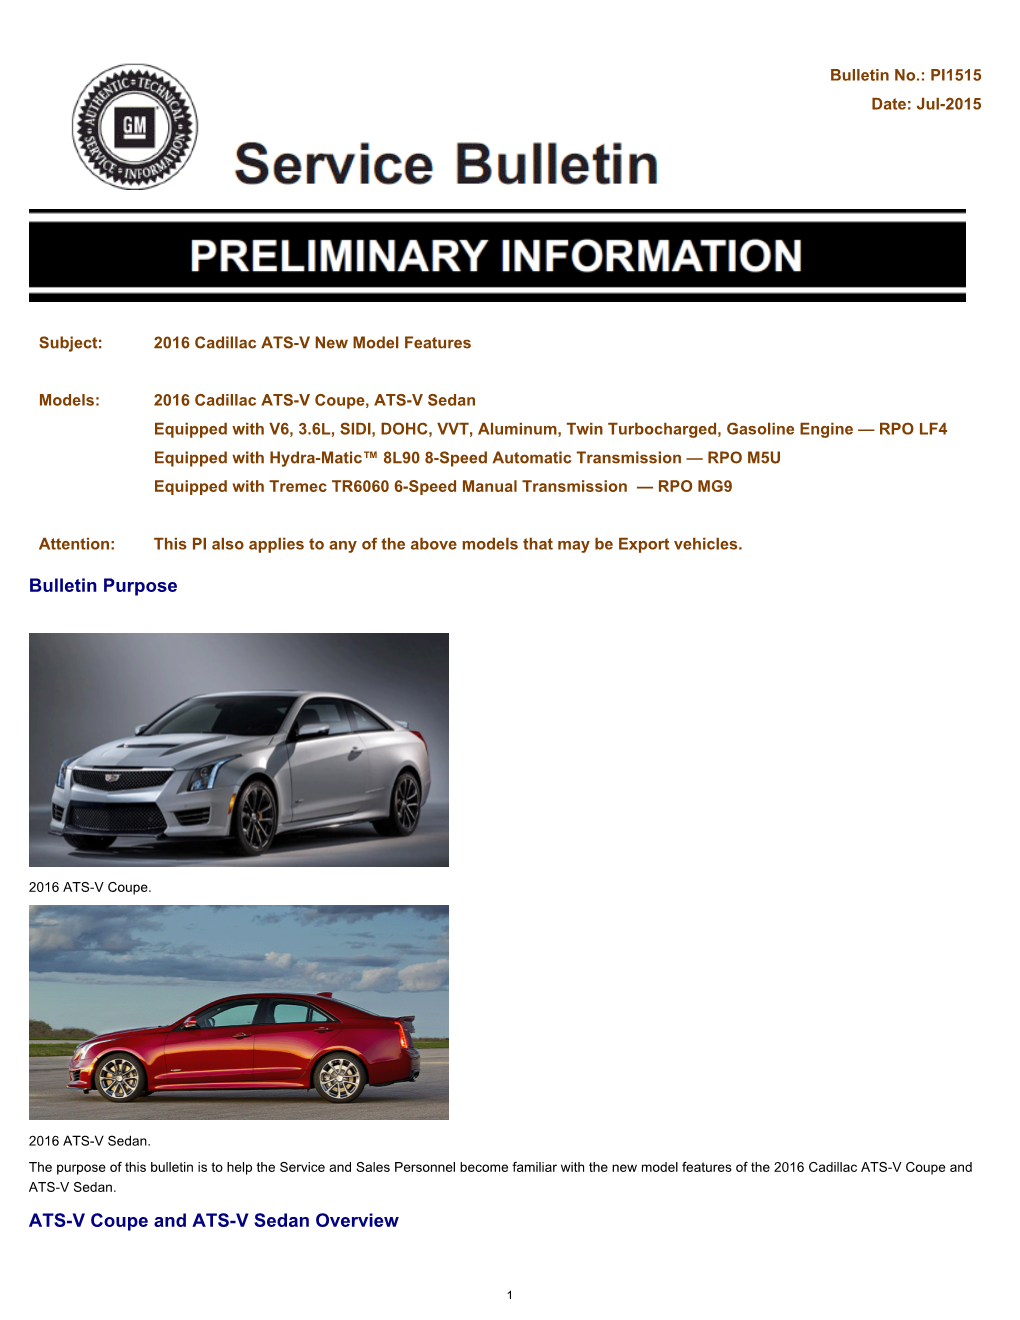 Bulletin Purpose ATS-V Coupe and ATS-V Sedan Overview